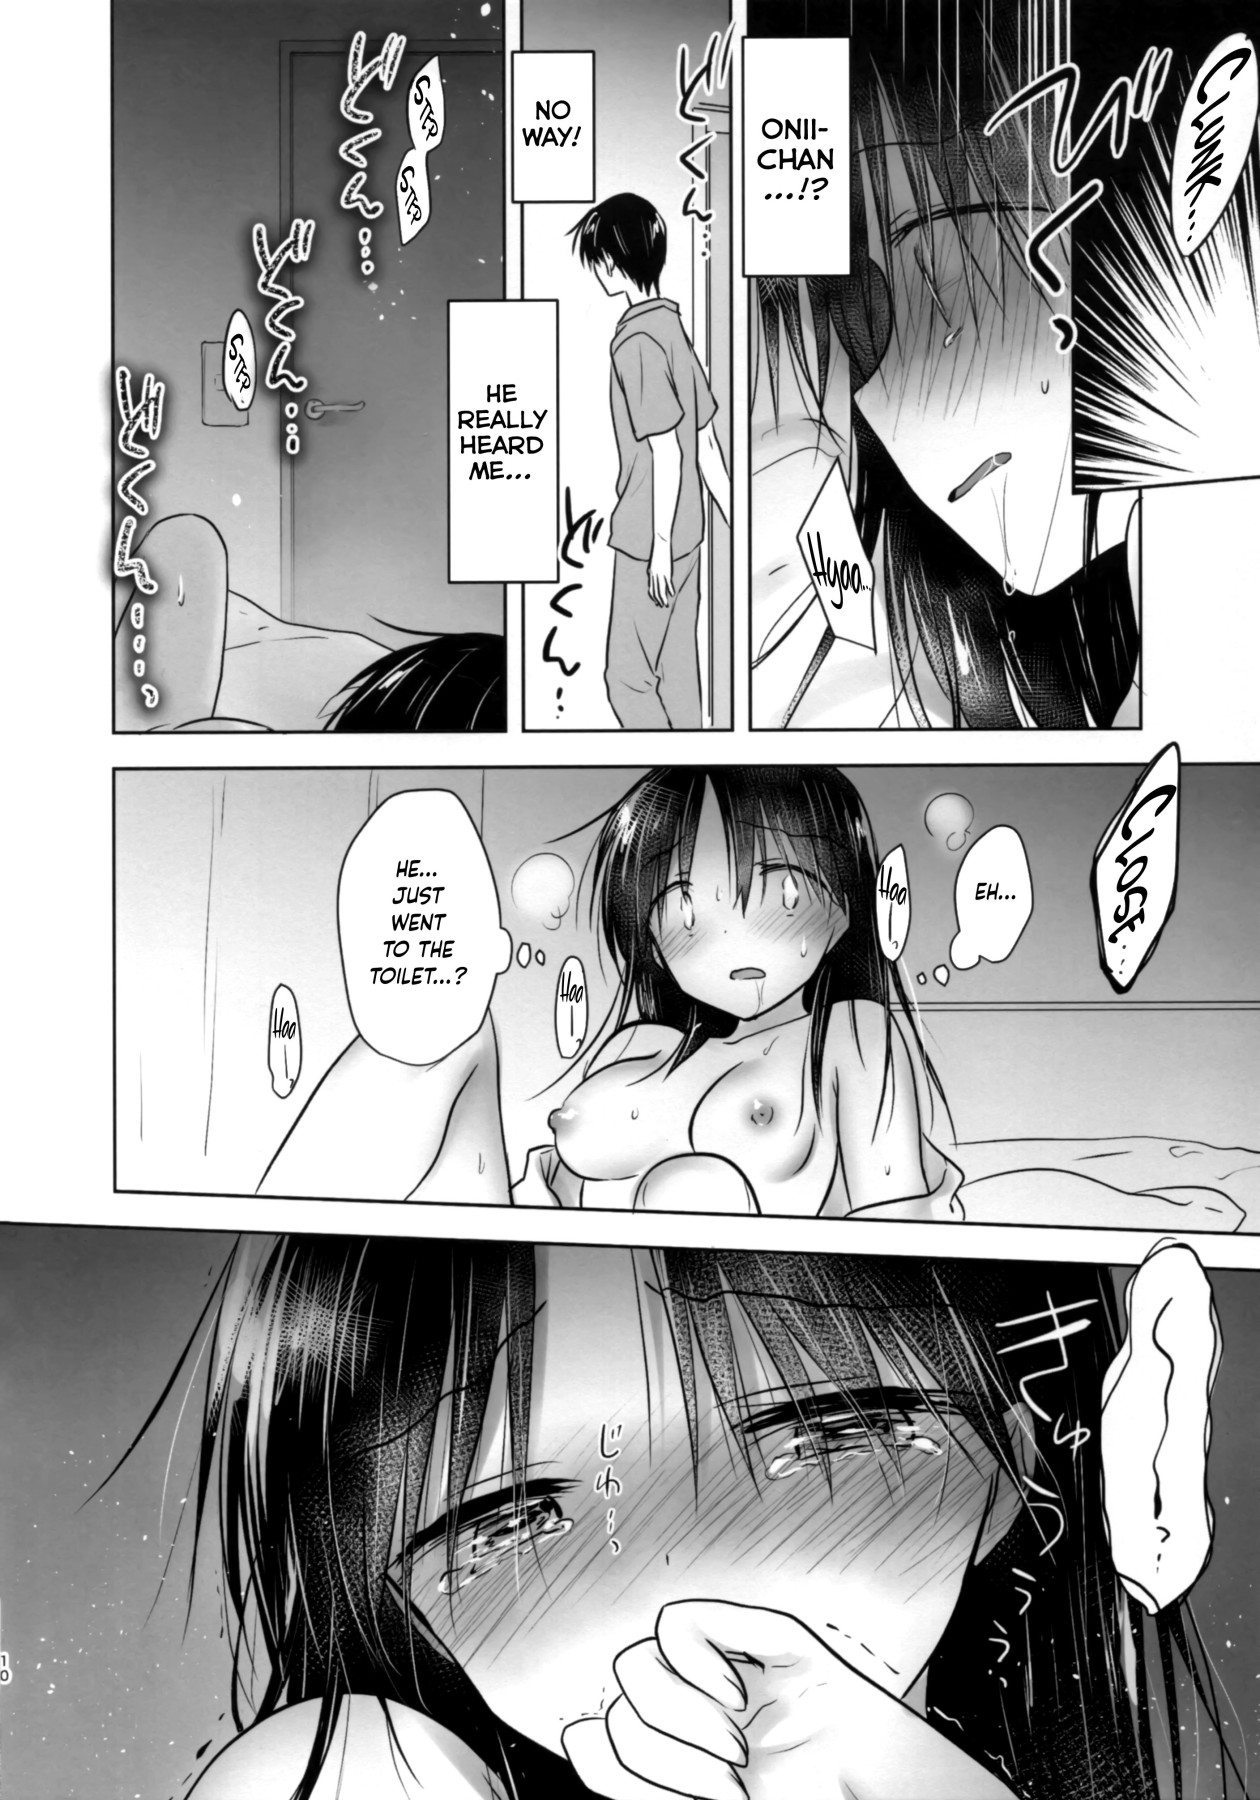 Manga anime sex